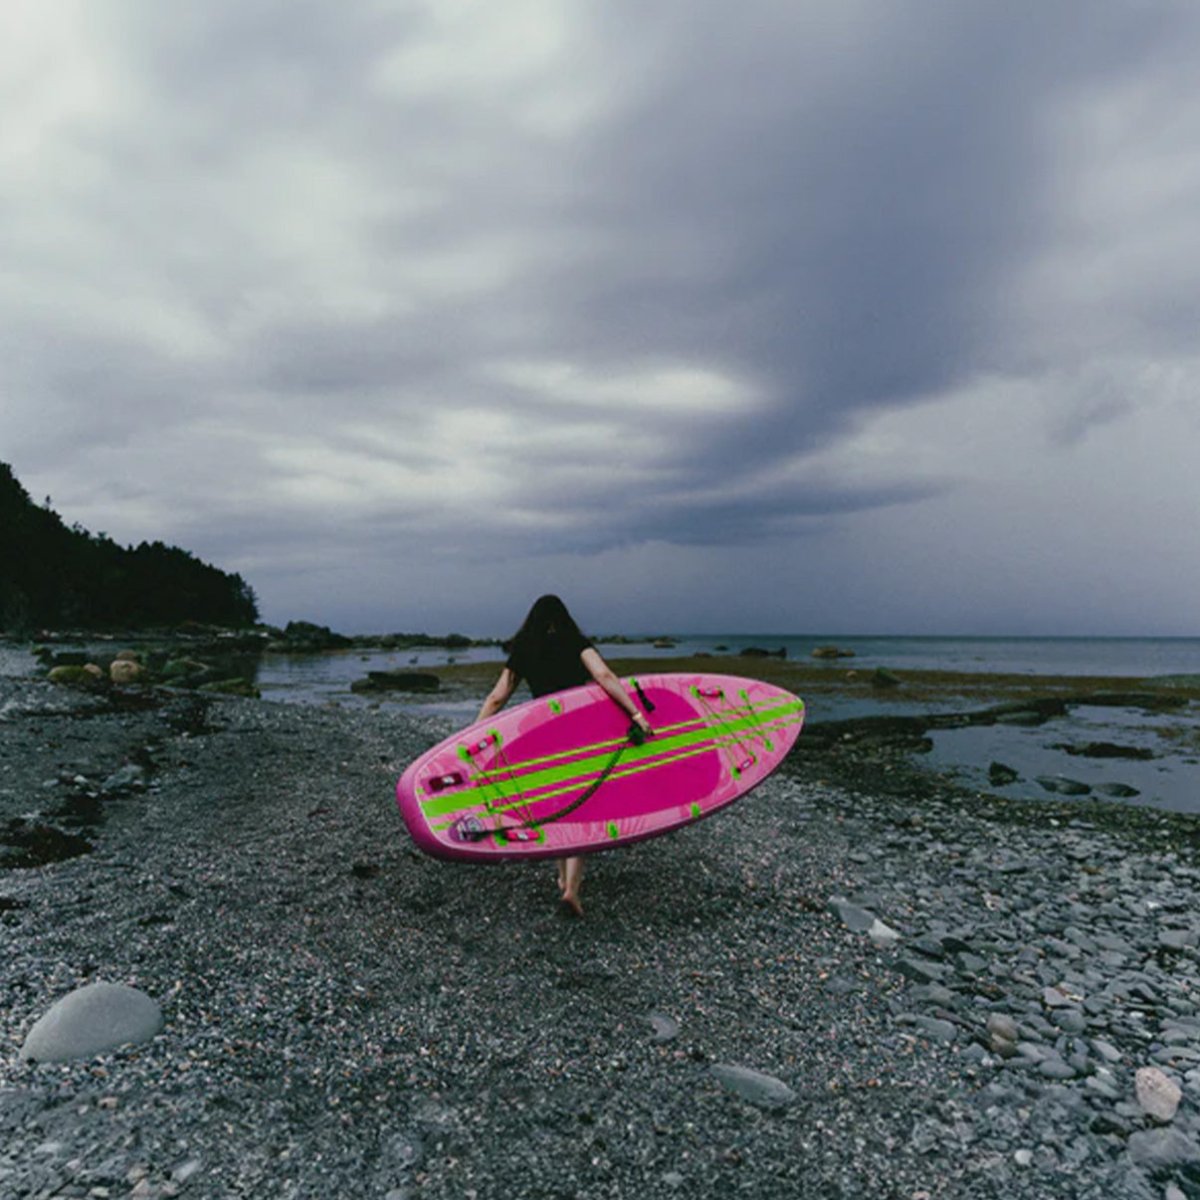 Waikiki Rose: Paddleboard Gonflable 10'6" Haut de Gamme - Quebec SUP